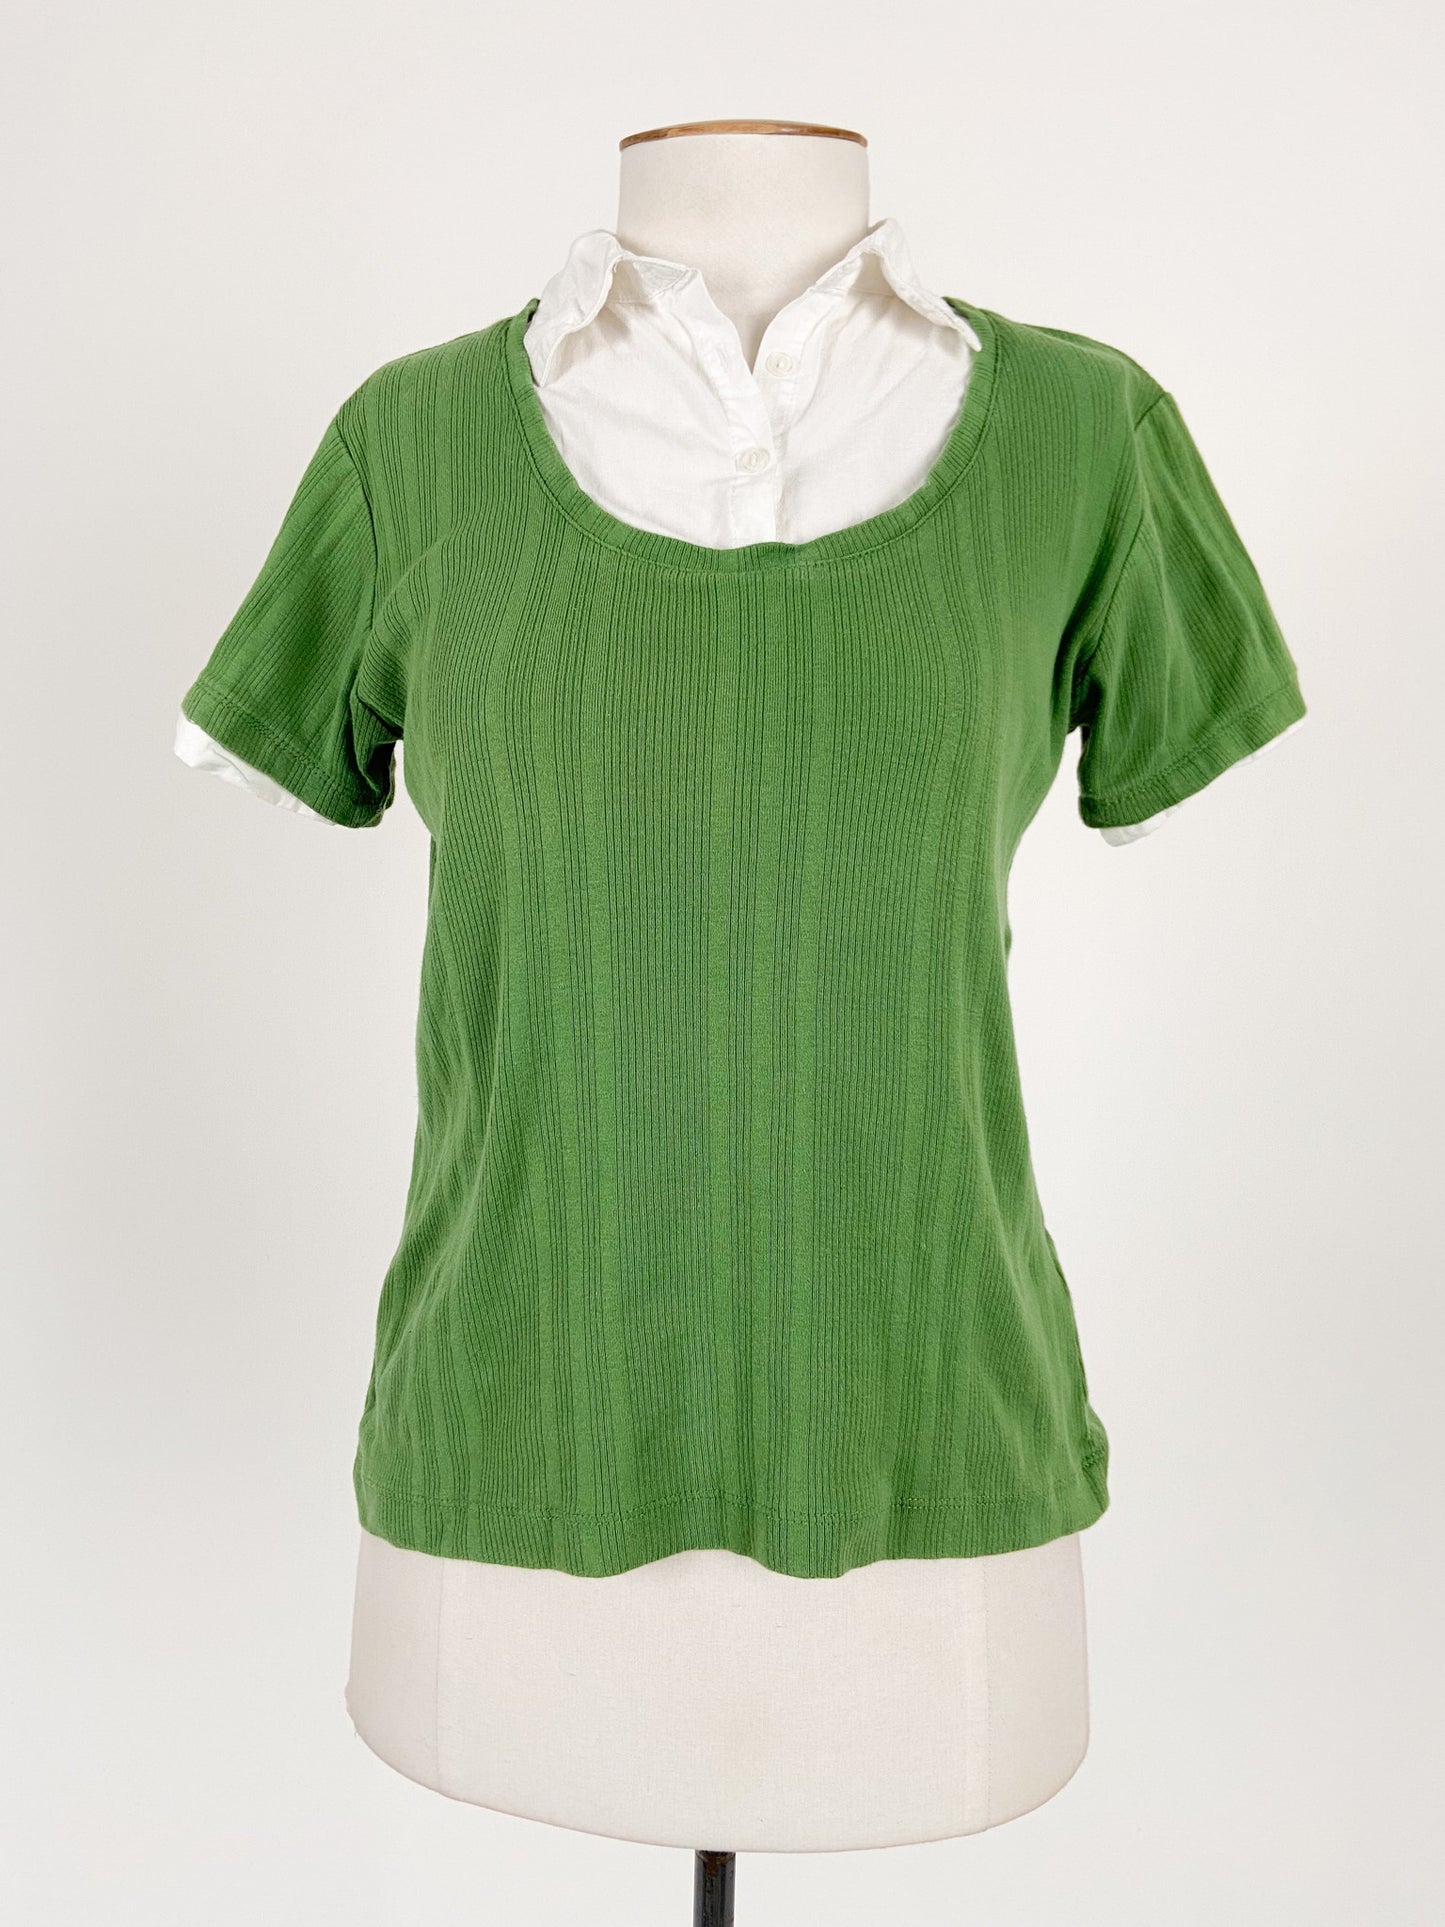 Ella J | Green Casual/Workwear Top | Size S